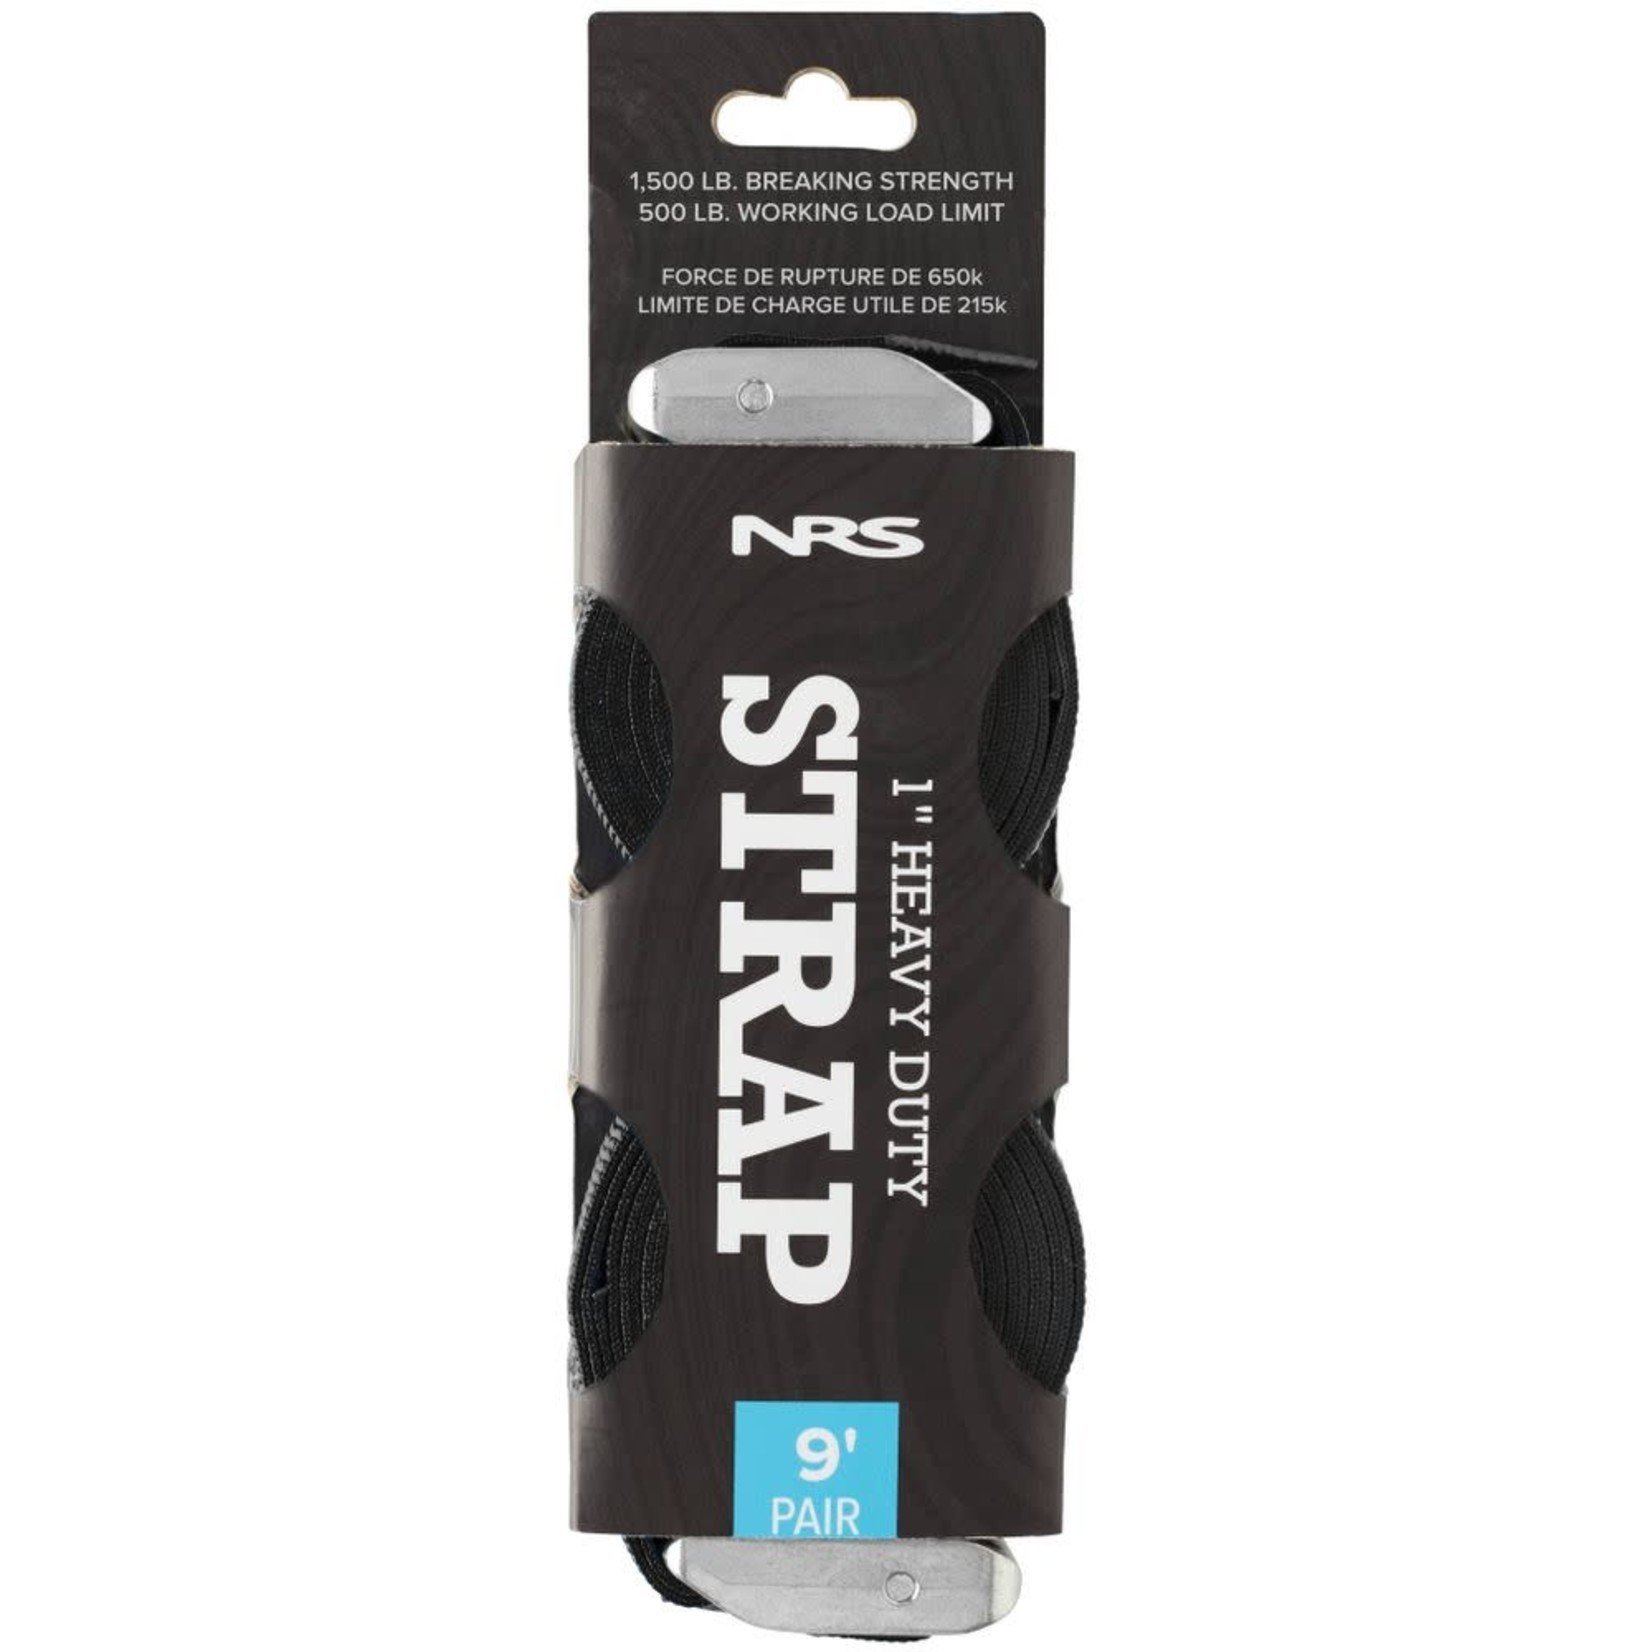 NRS NRS 1" HD Tie-Down Straps Stealth Black